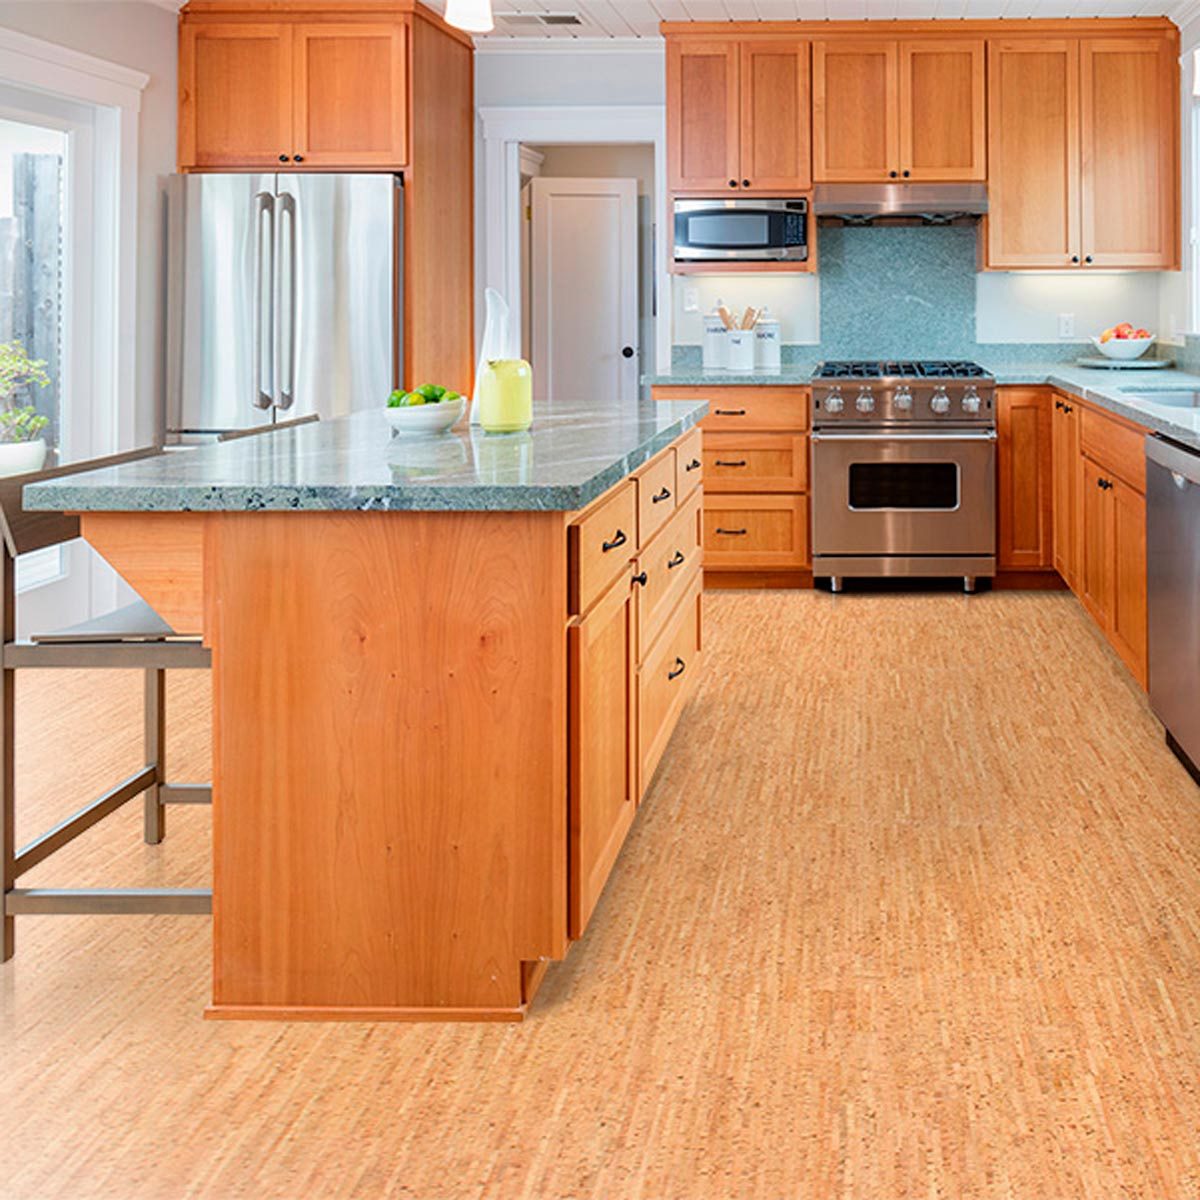 Silver Birch Forna Cork Floor Custom Designed Wooden Kitchen With Gorgeous Granite Counter 